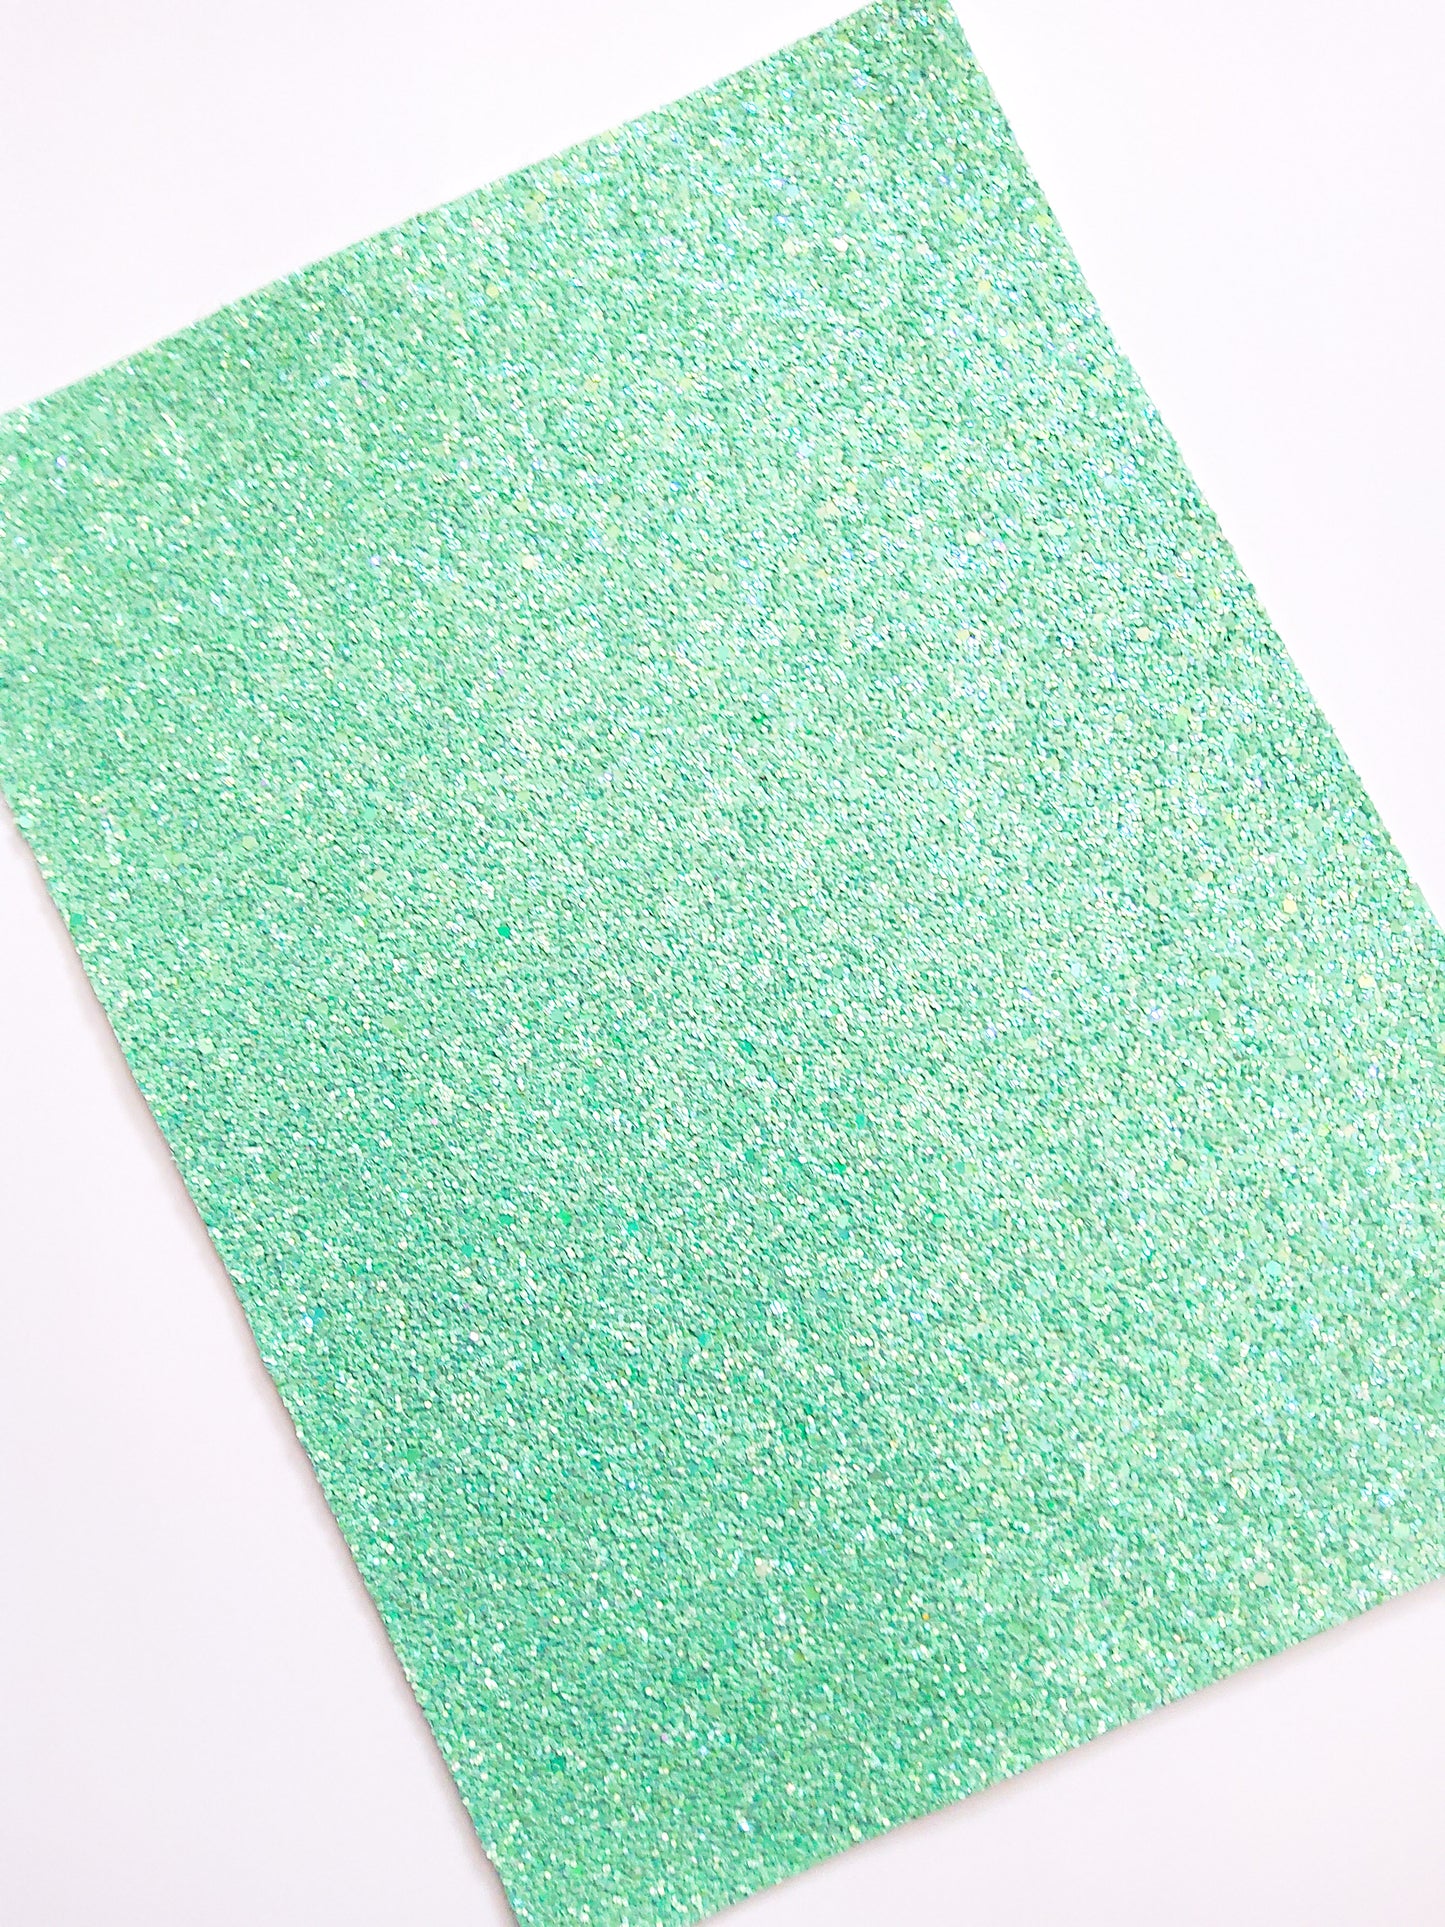 Mint Green Chunky Glitter 9x12 faux leather sheet